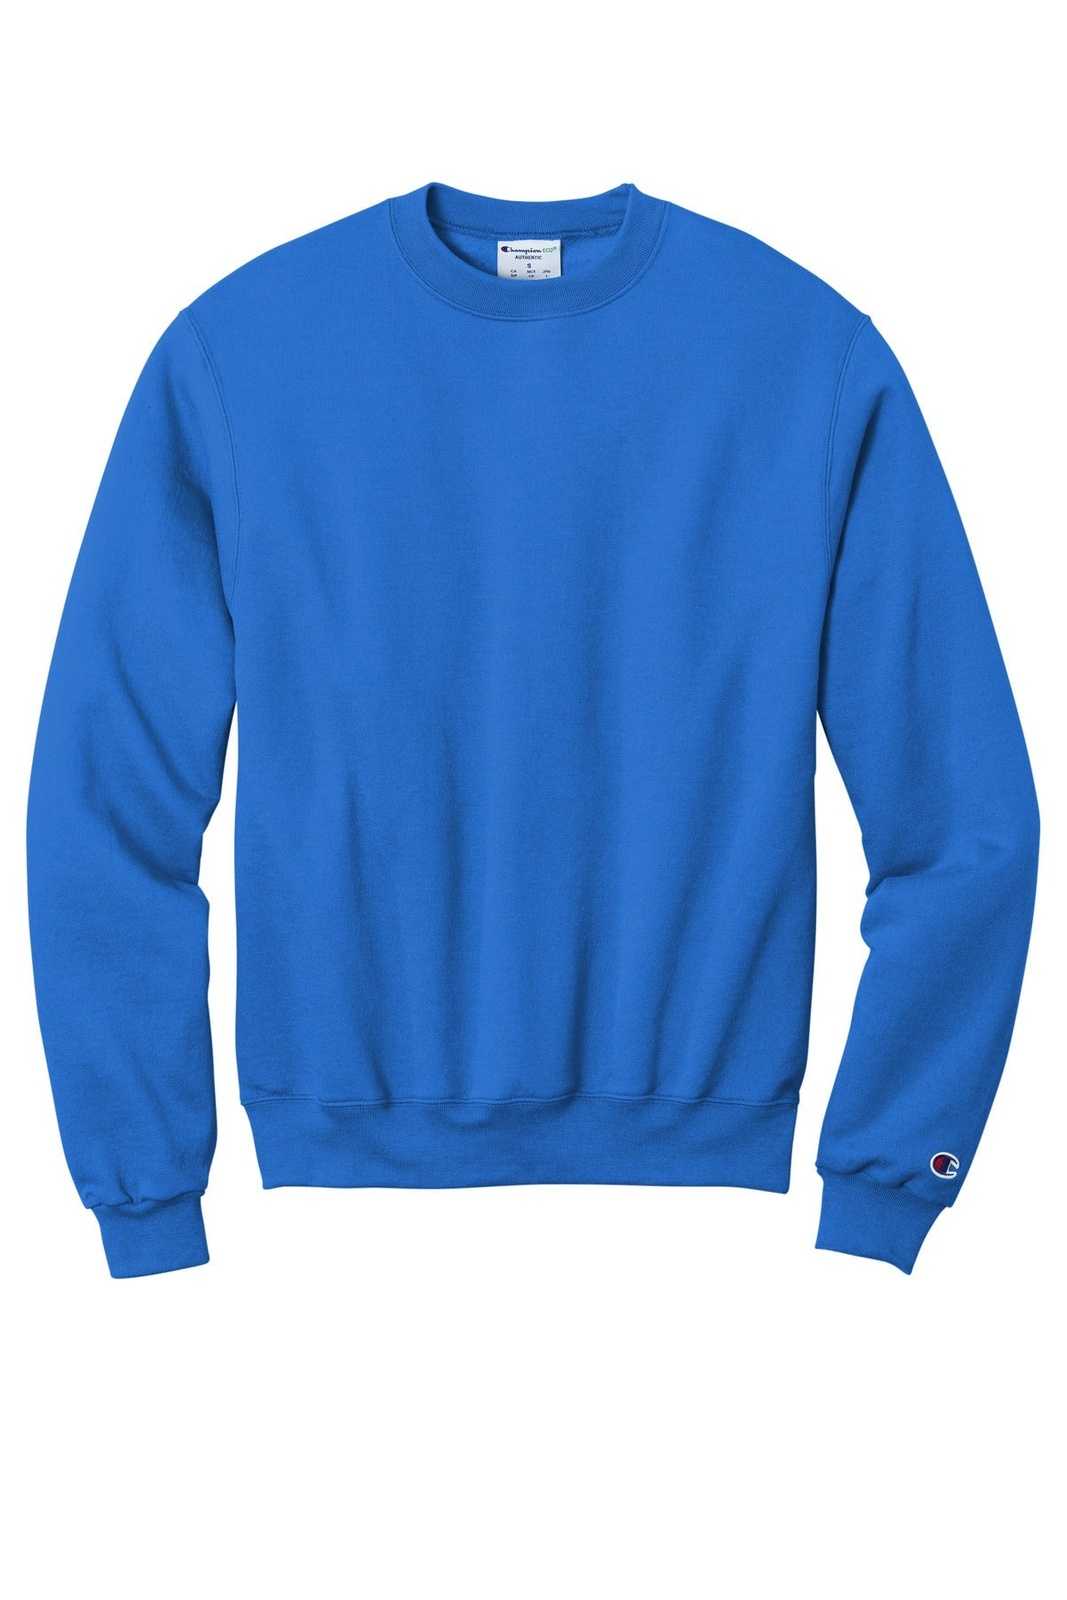 Champion S6000 Powerblend Crewneck Sweatshirt - Royal Blue